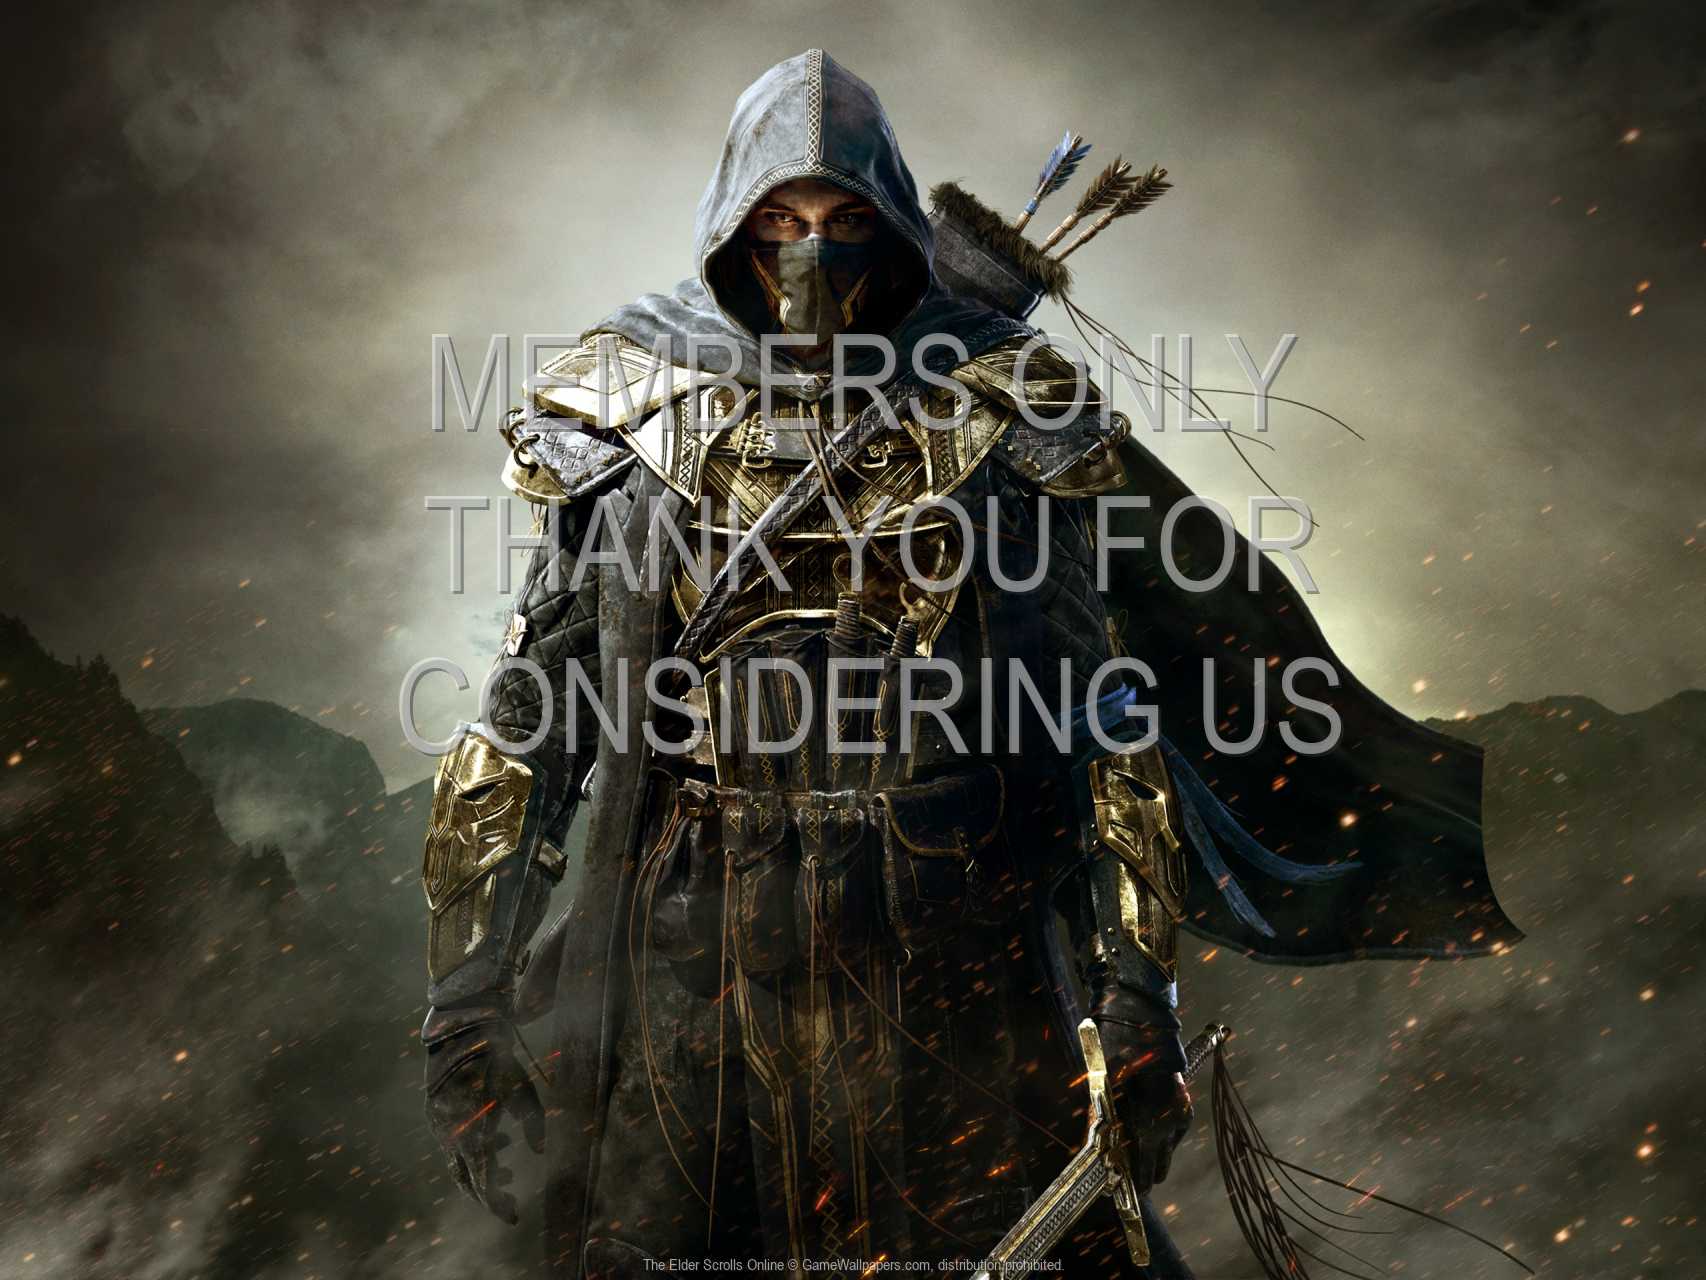 The Elder Scrolls Online 720p Horizontal Mobile wallpaper or background 03